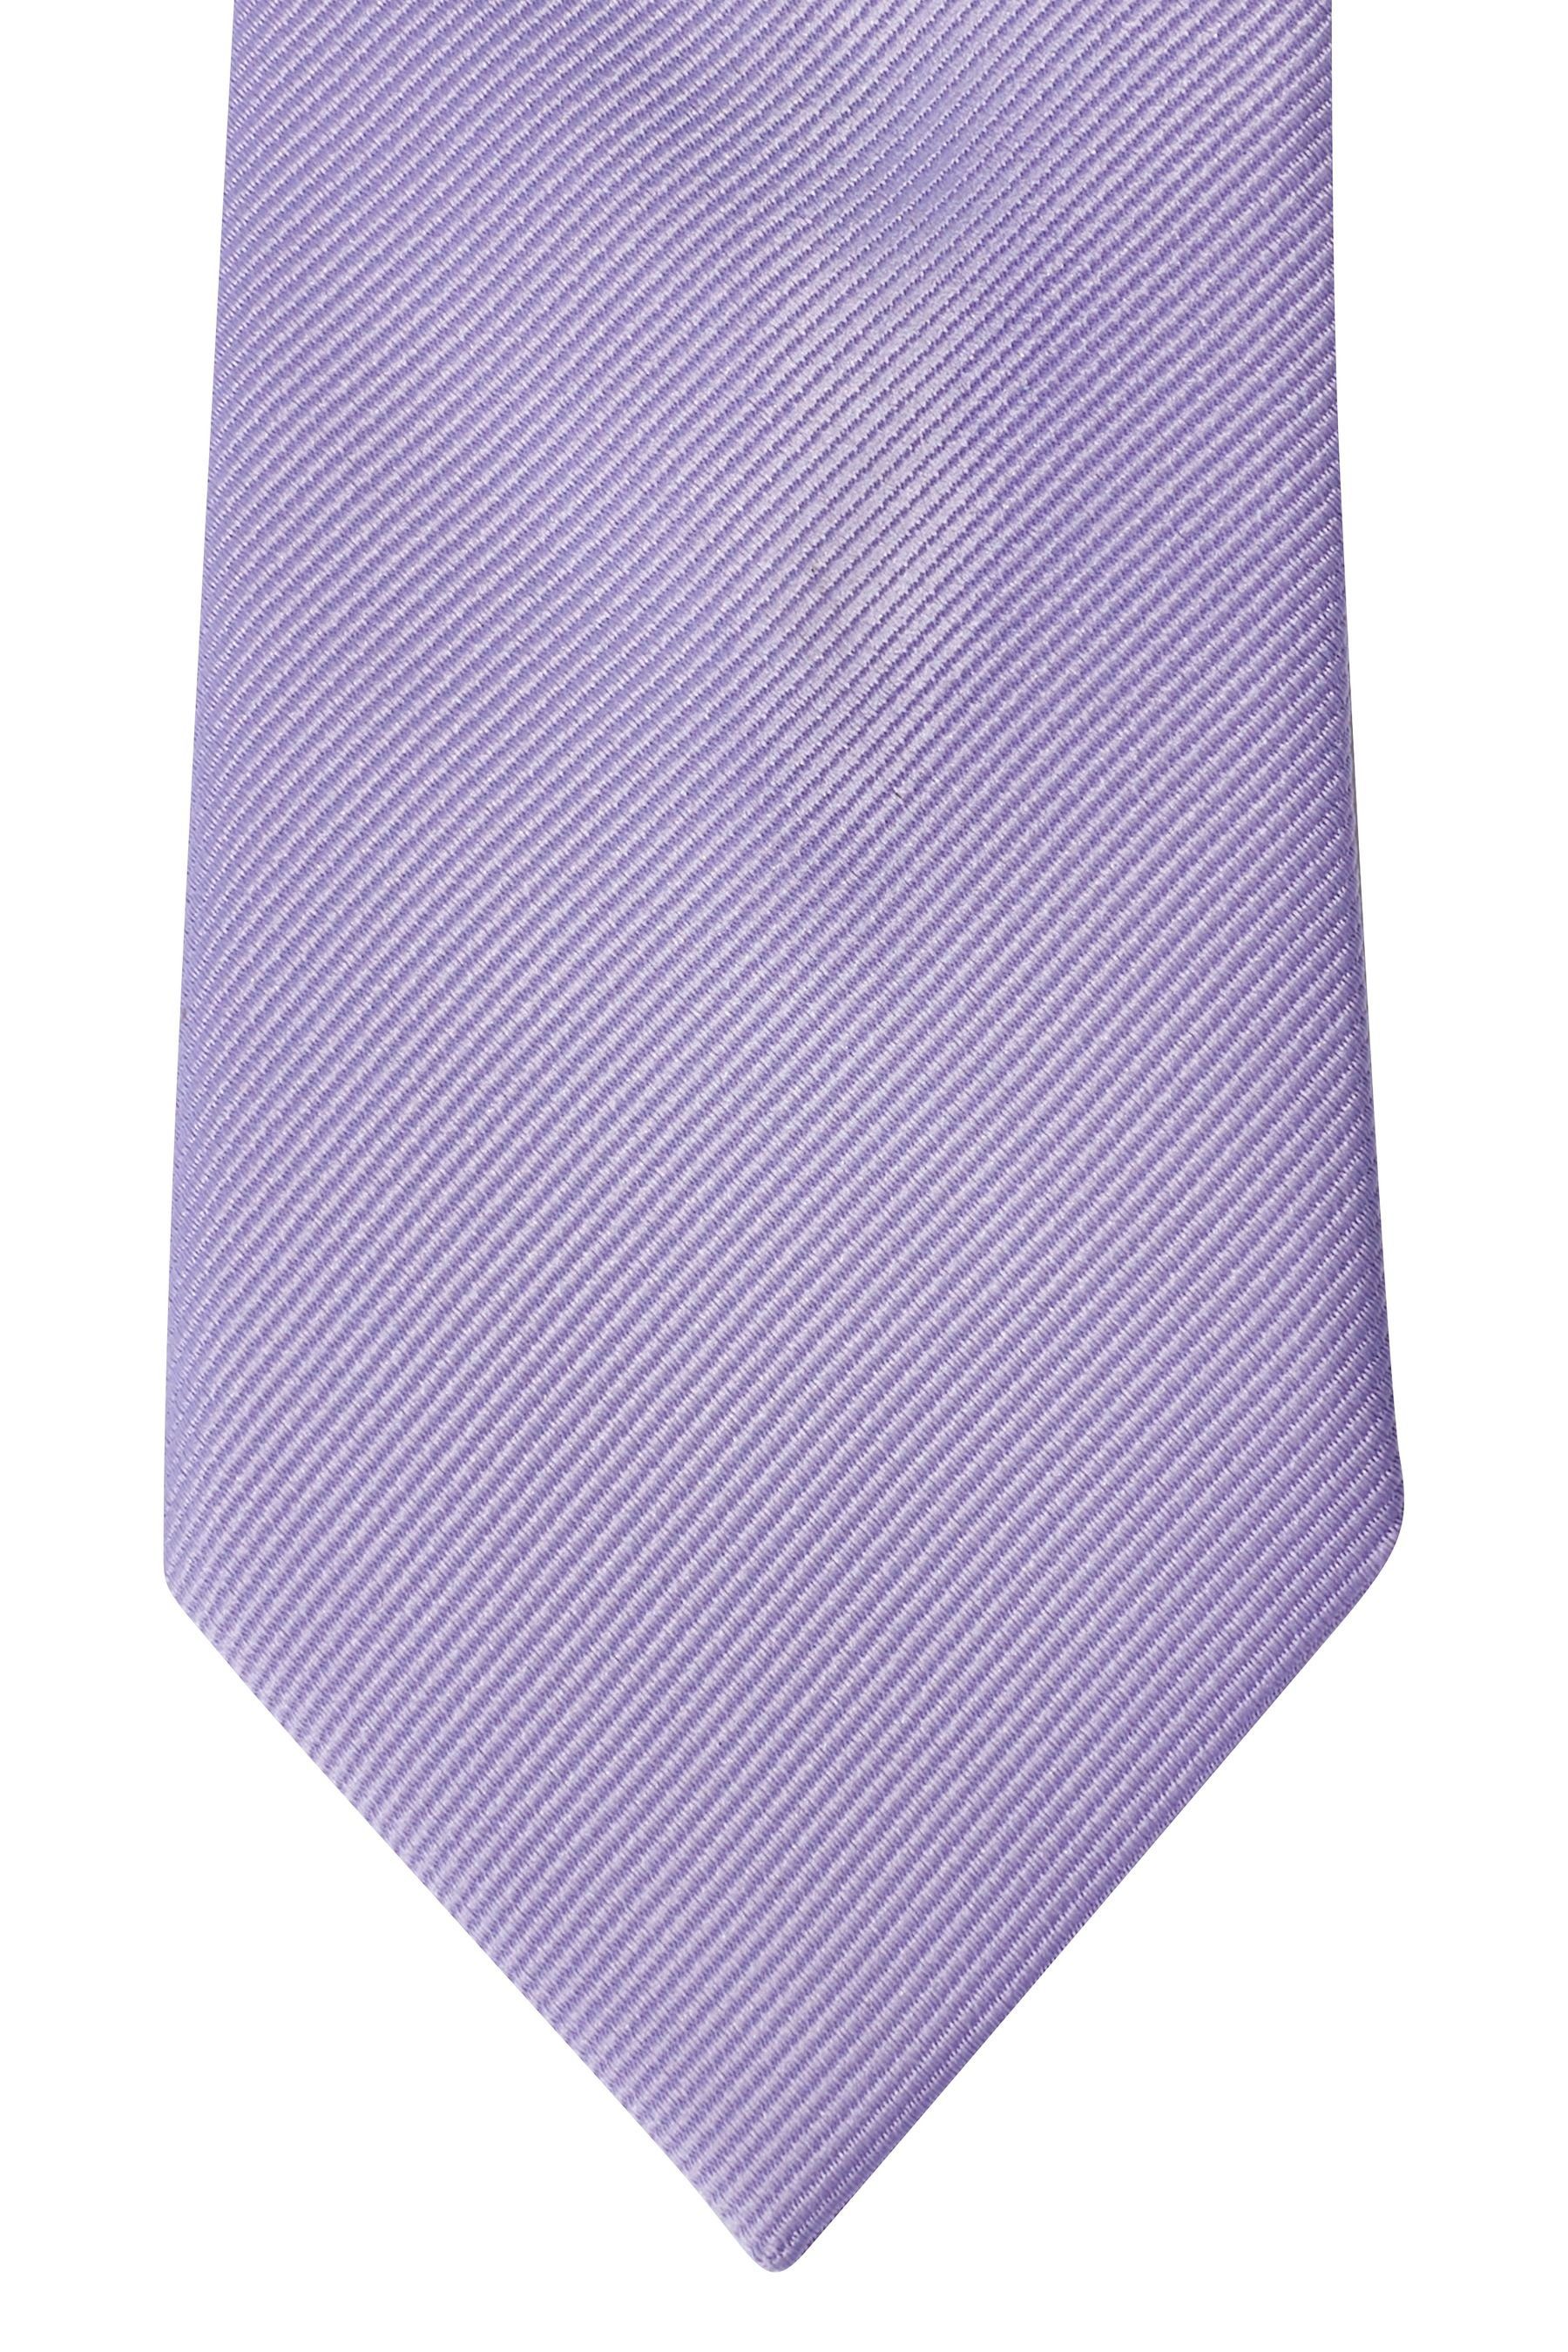 Next Krawatte Schmale Twill-Krawatte (1-St) Lilac Purple